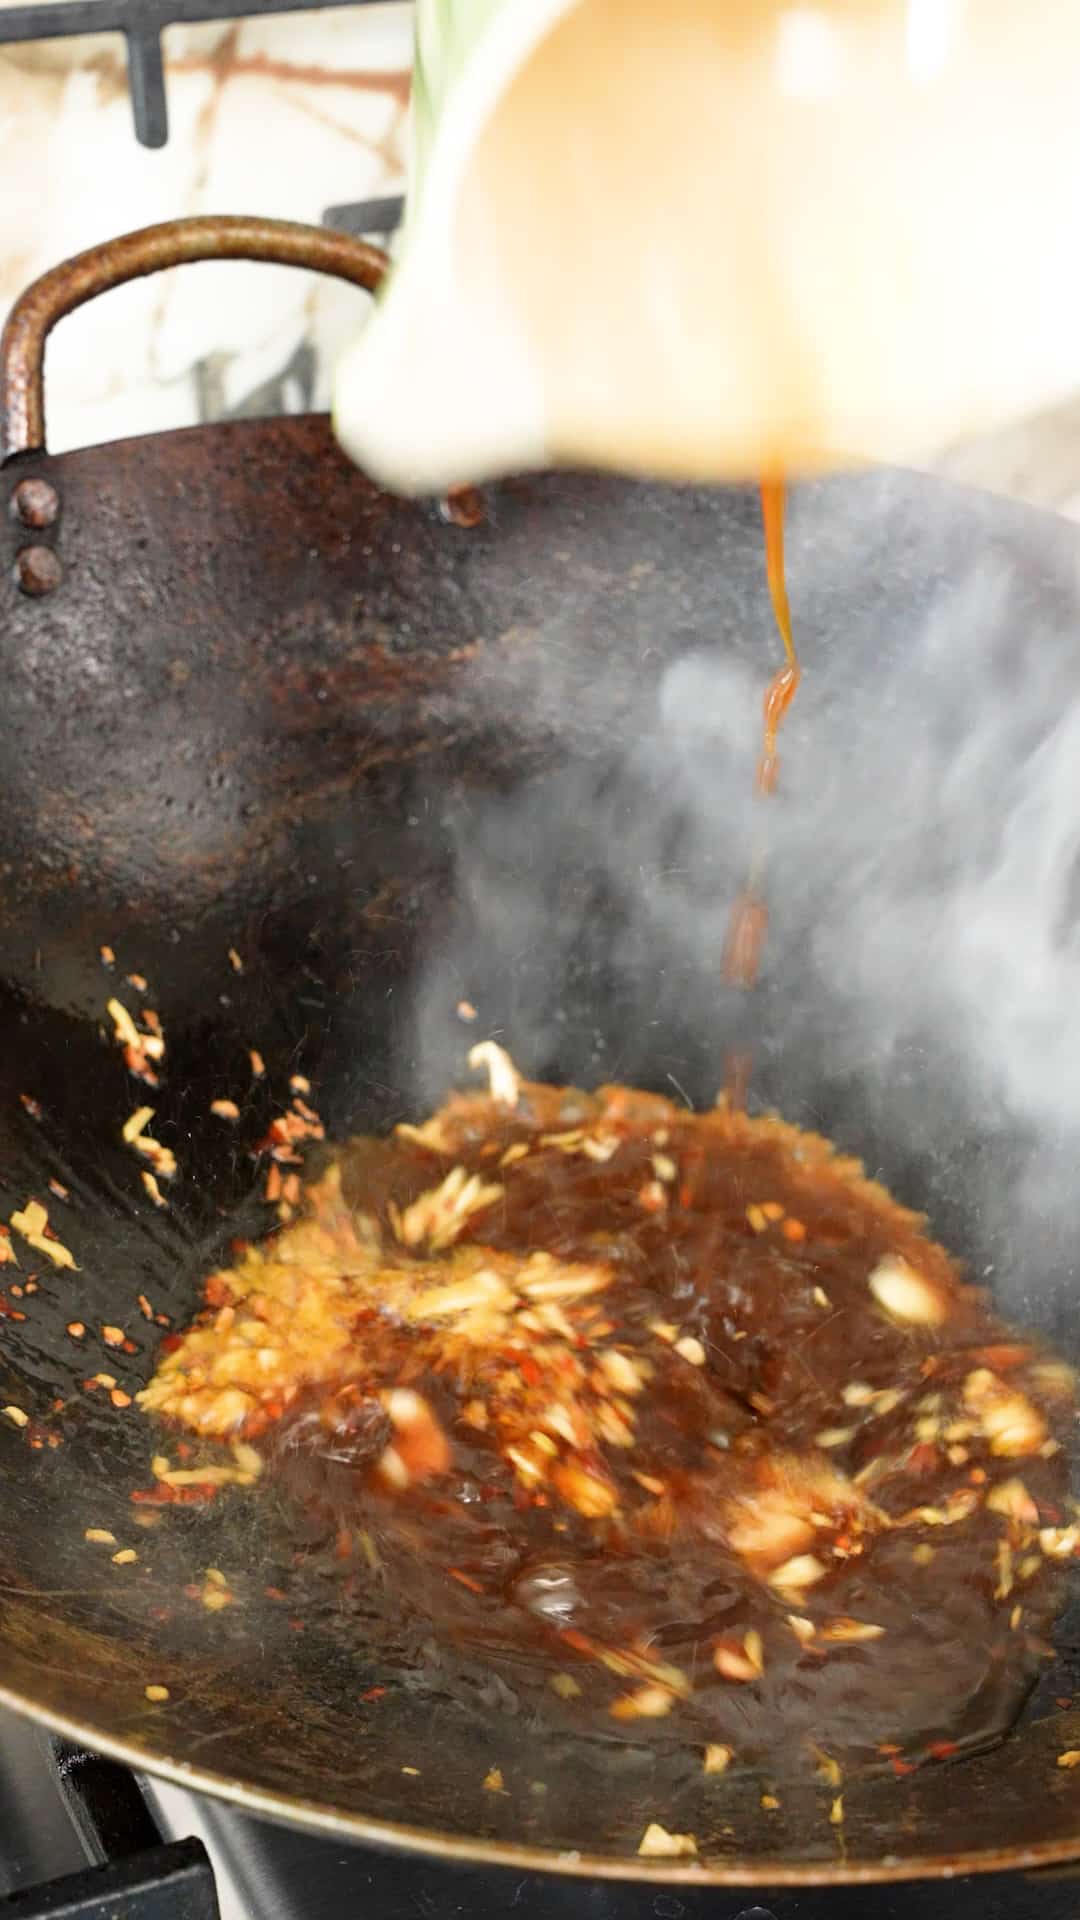 Orange sauce being added to a wok.